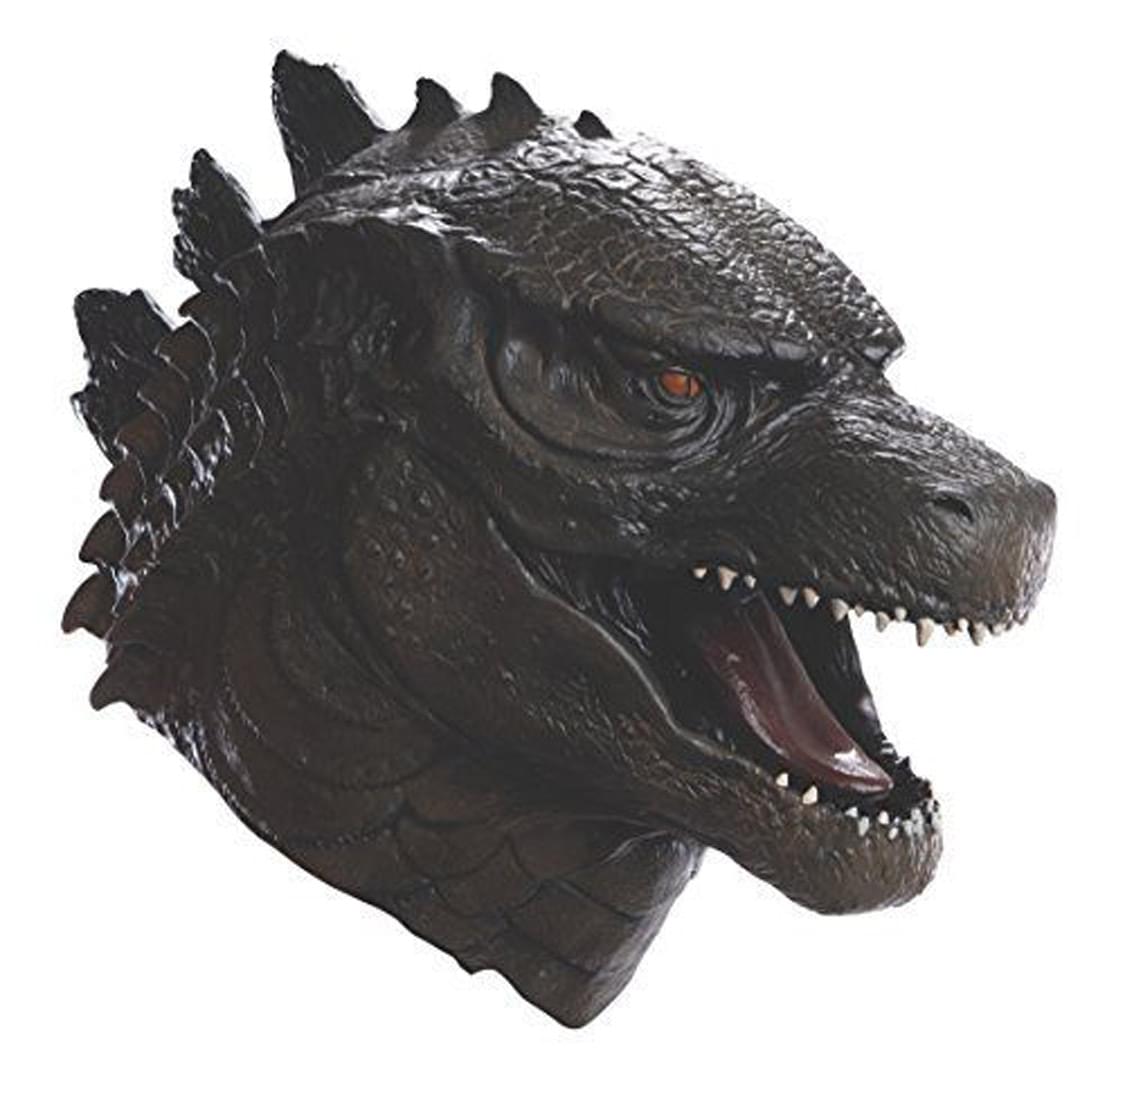 Godzilla Deluxe OverHead Latex Costume Mask Adult